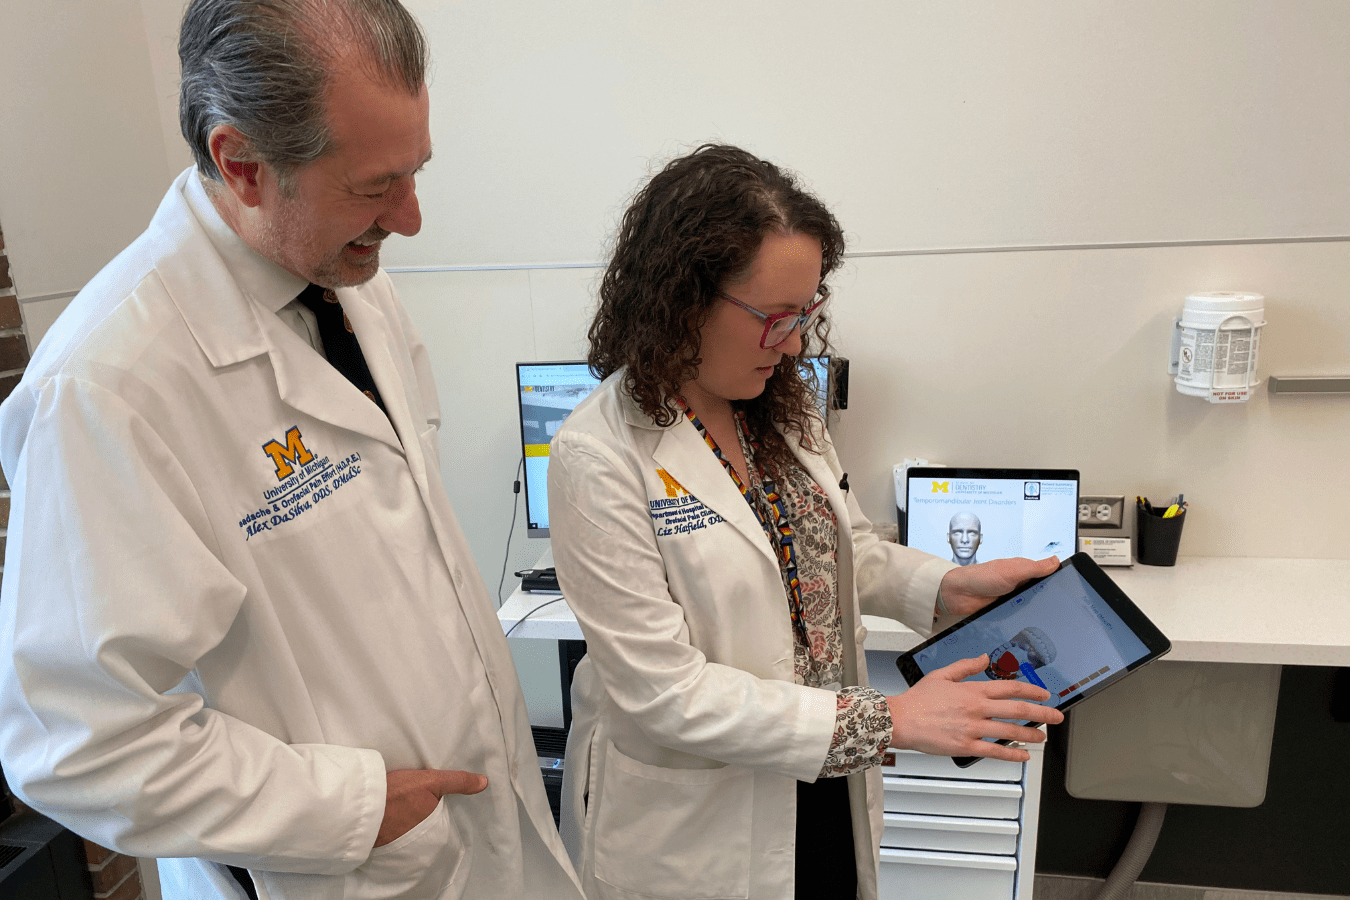 Alexandre DaSilva and Liz Hatfield in lab coats looking at a tablet.